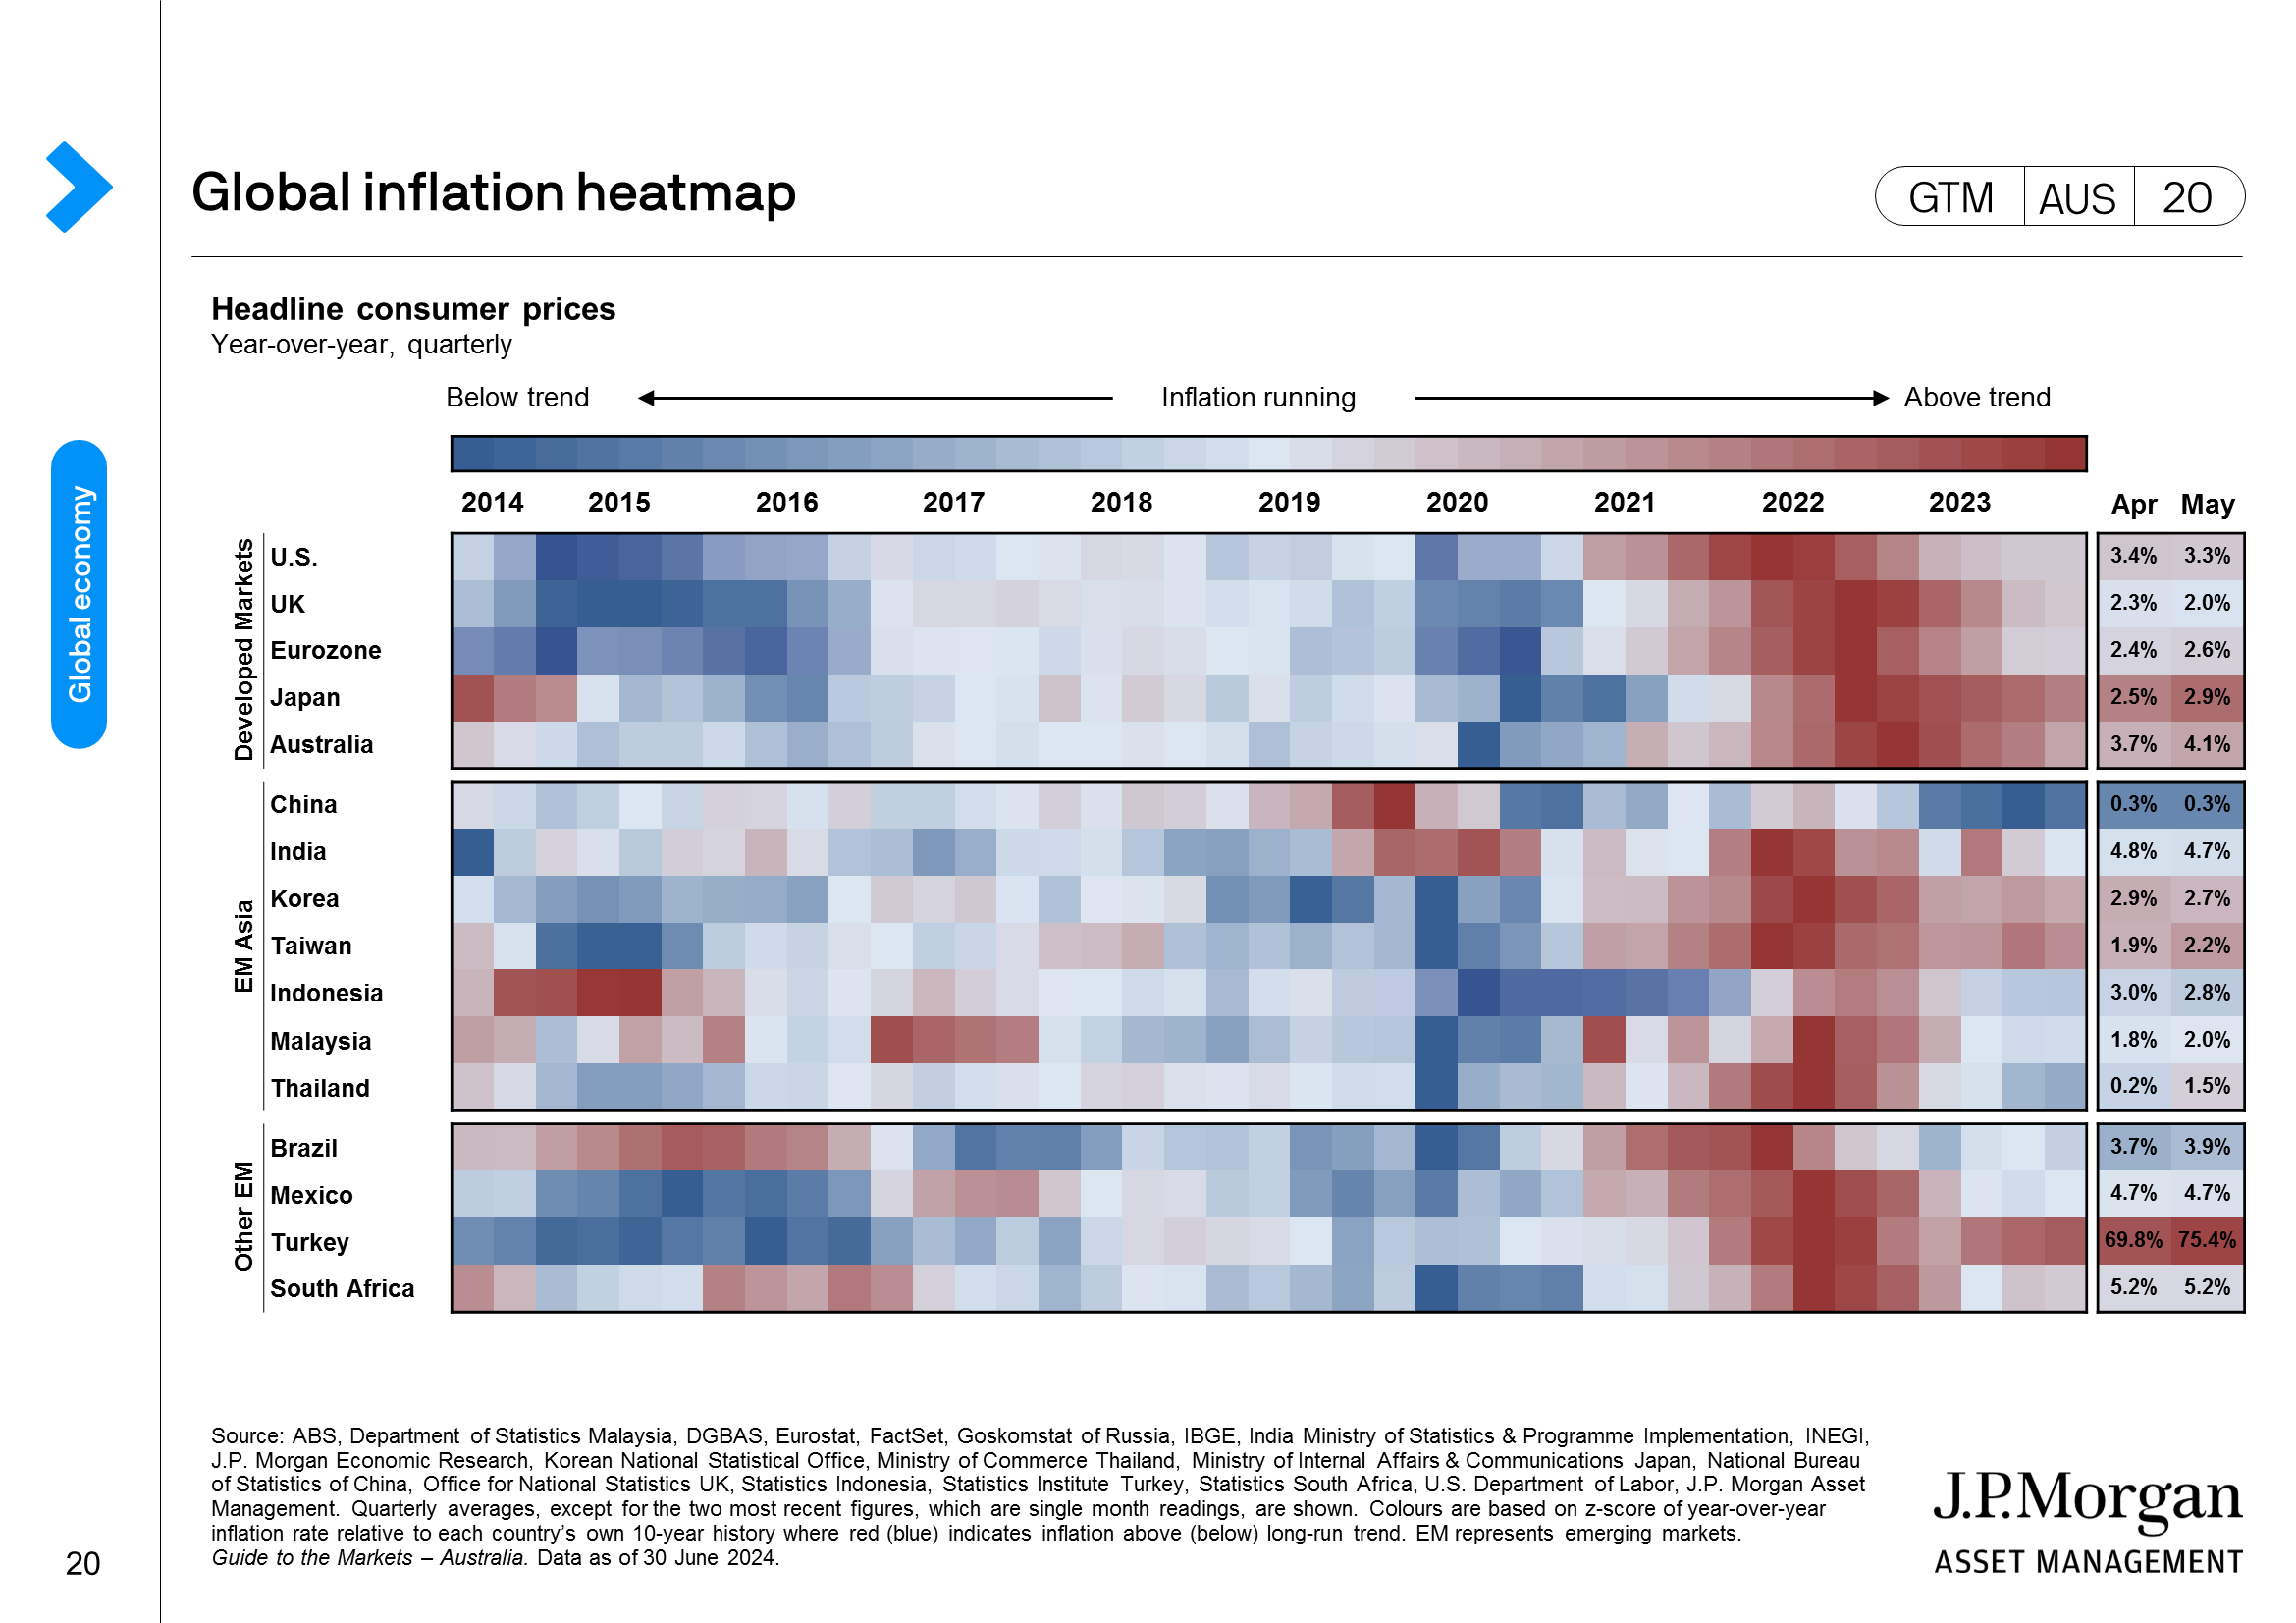 U.S.: Inflation